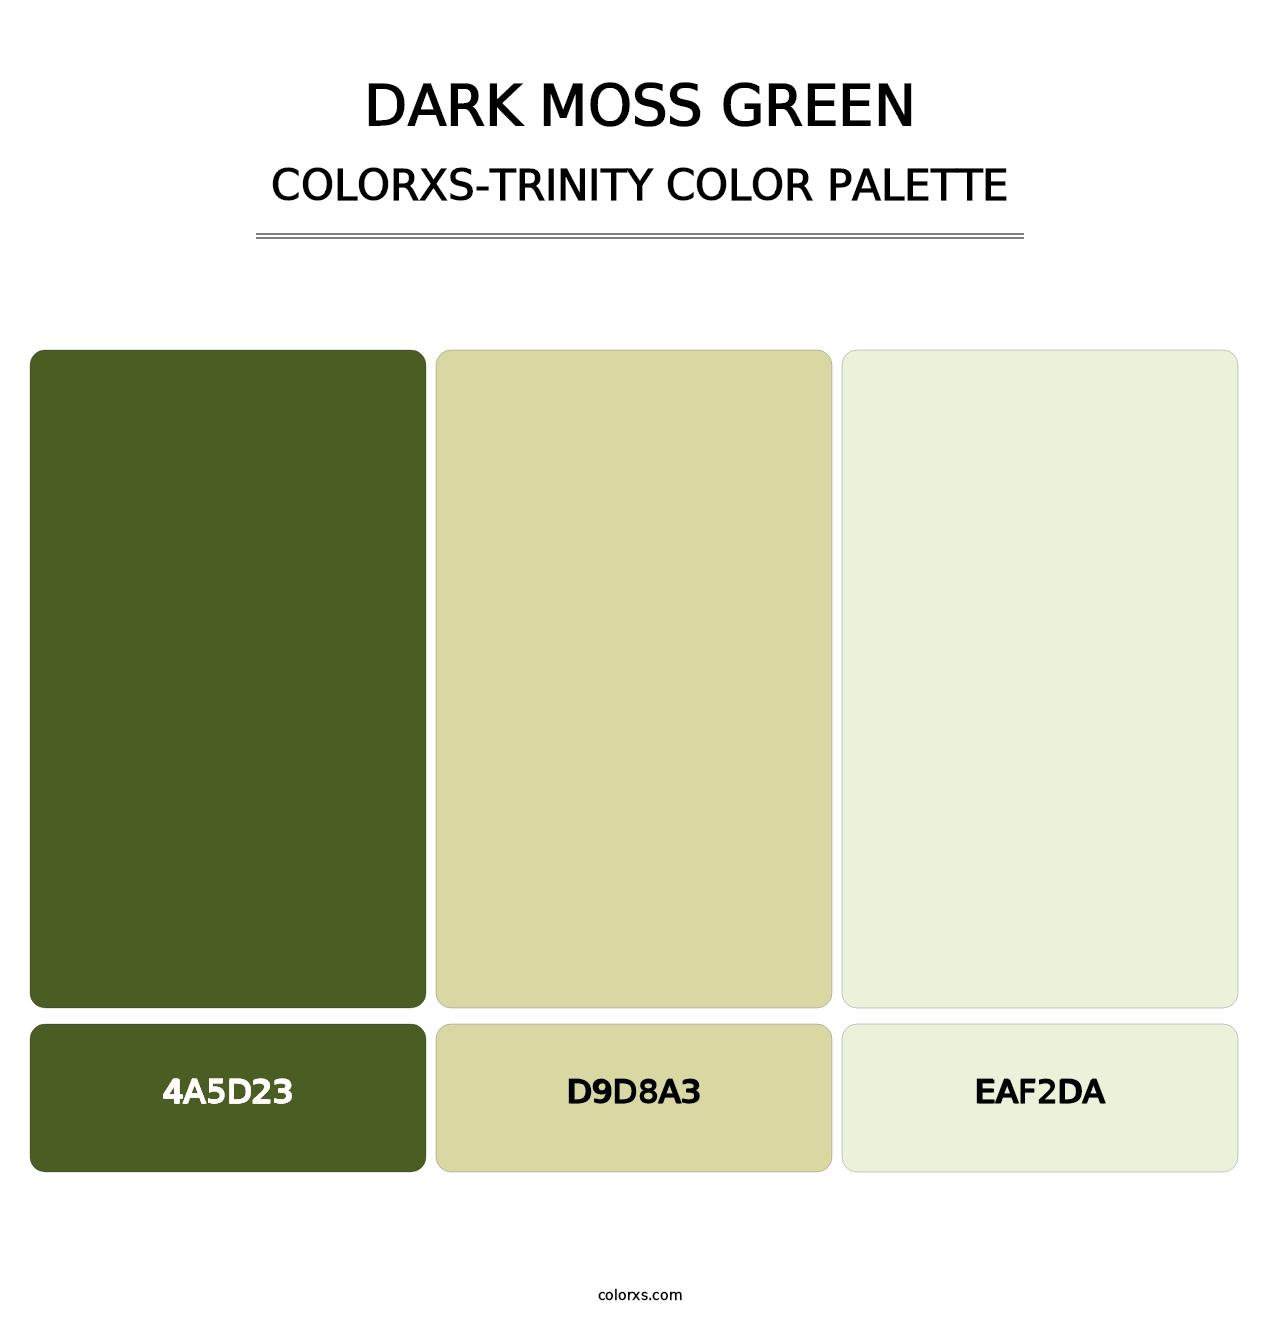 Dark Moss Green - Colorxs Trinity Palette